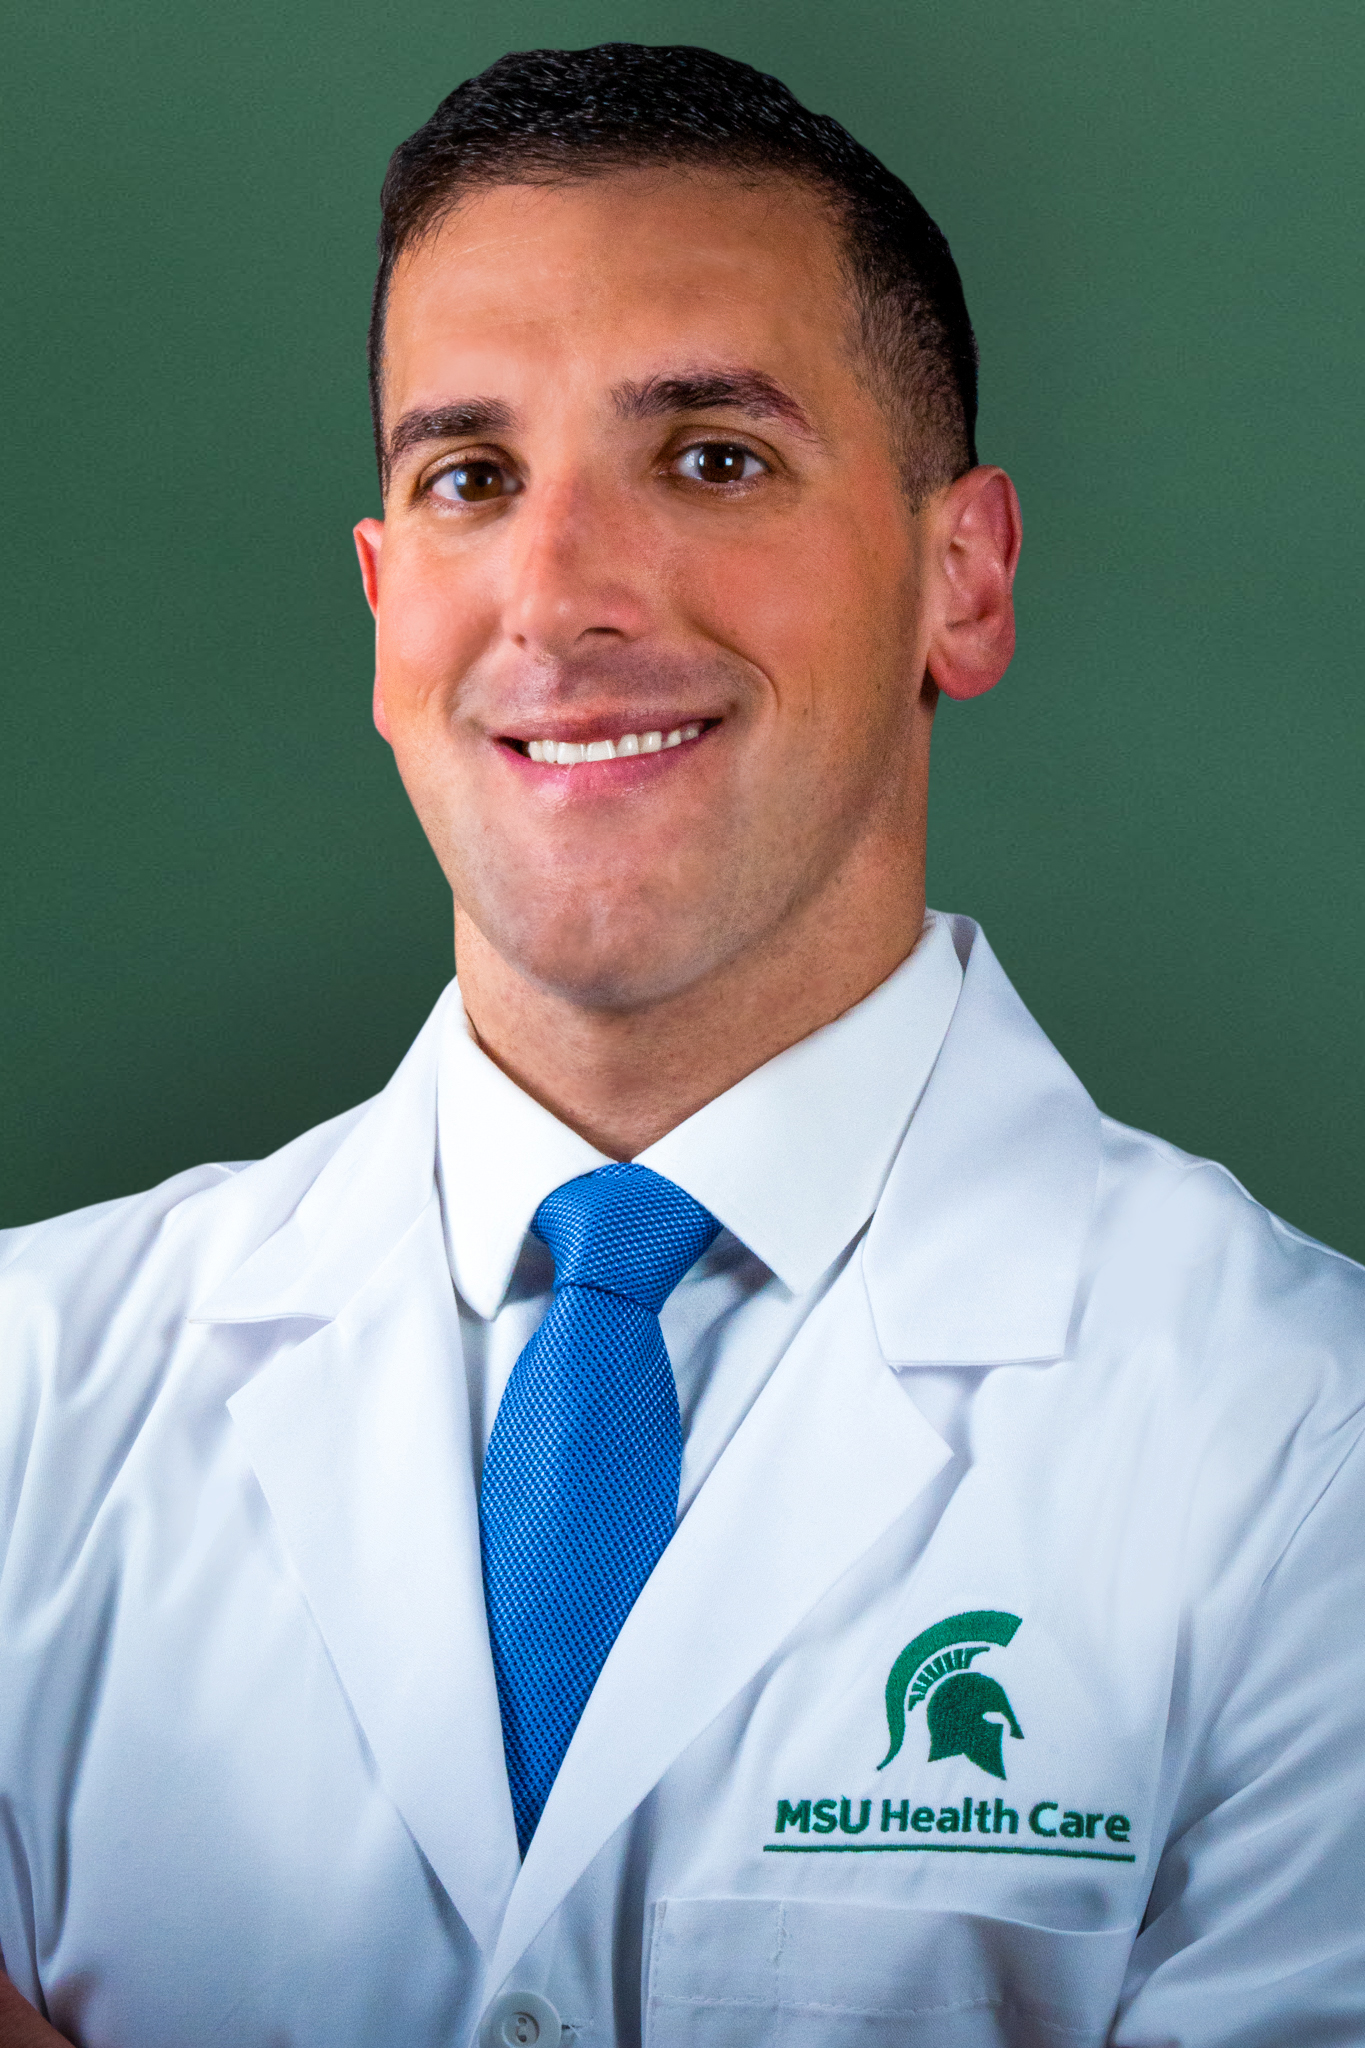 Toufic Jildeh, MD, MSU Health Care Sports Medicine and Orthopedic Center Clinician